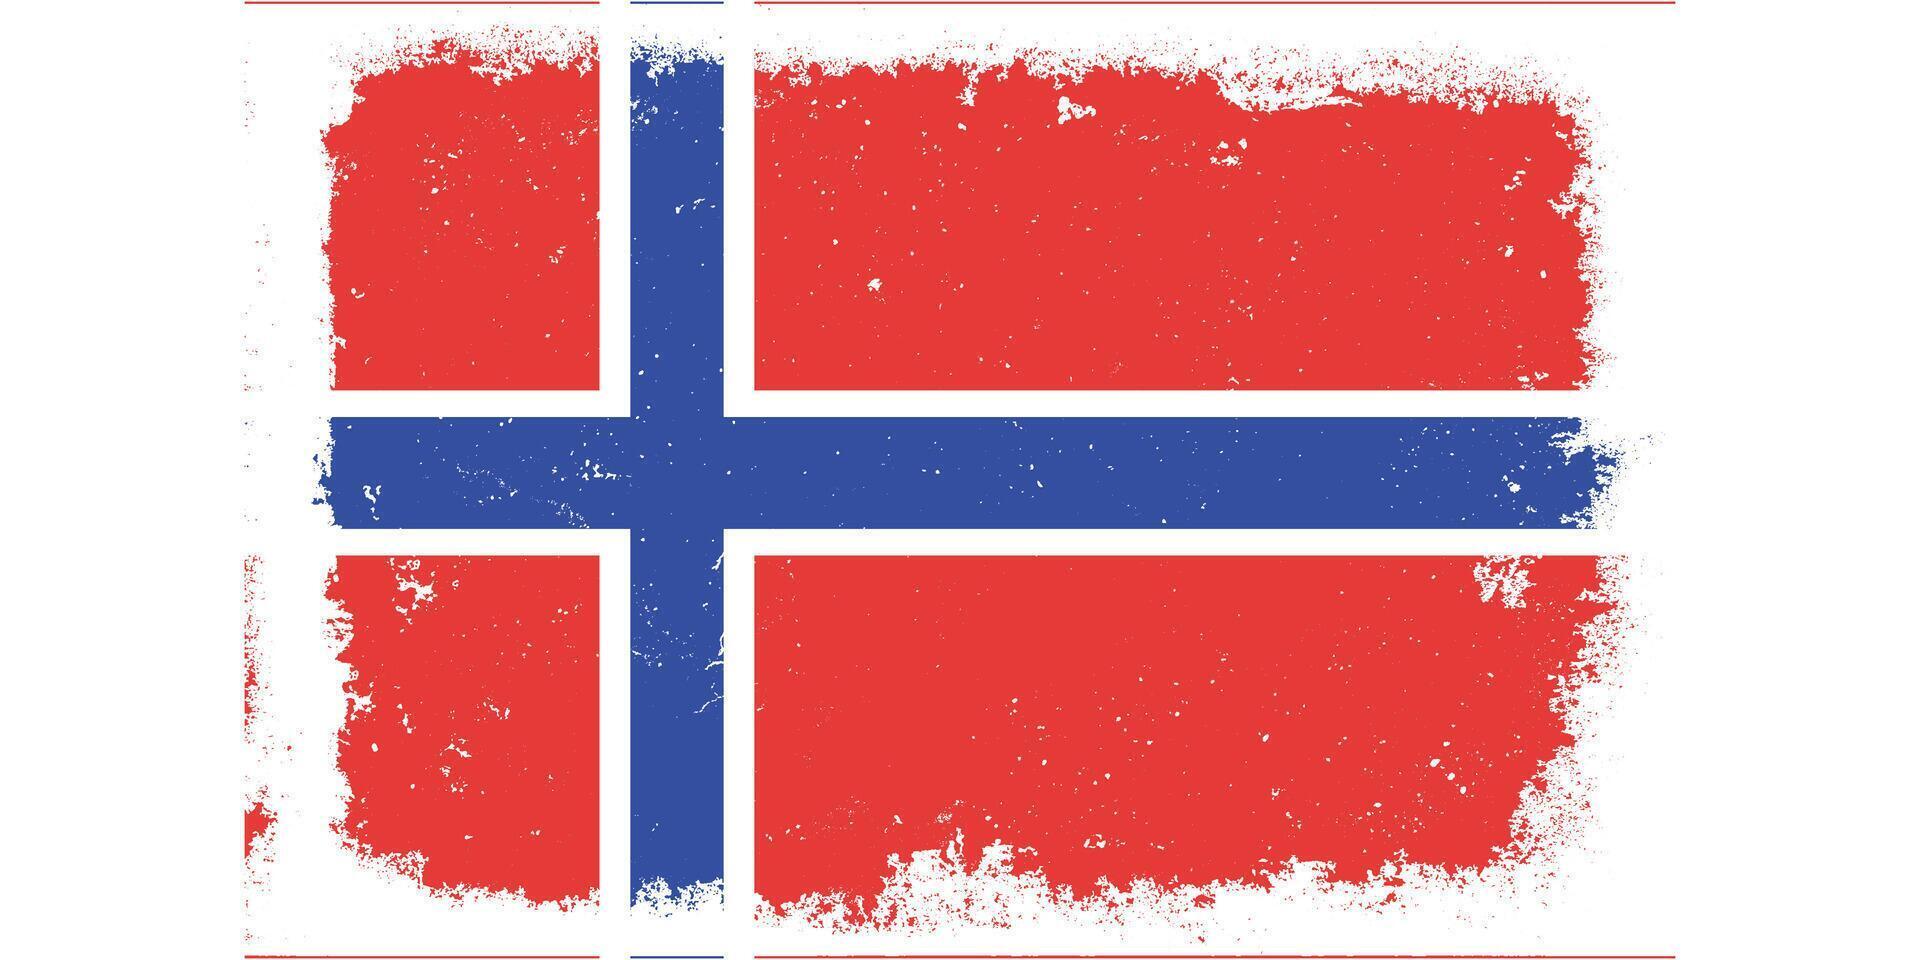 plano Projeto grunge Noruega bandeira fundo vetor